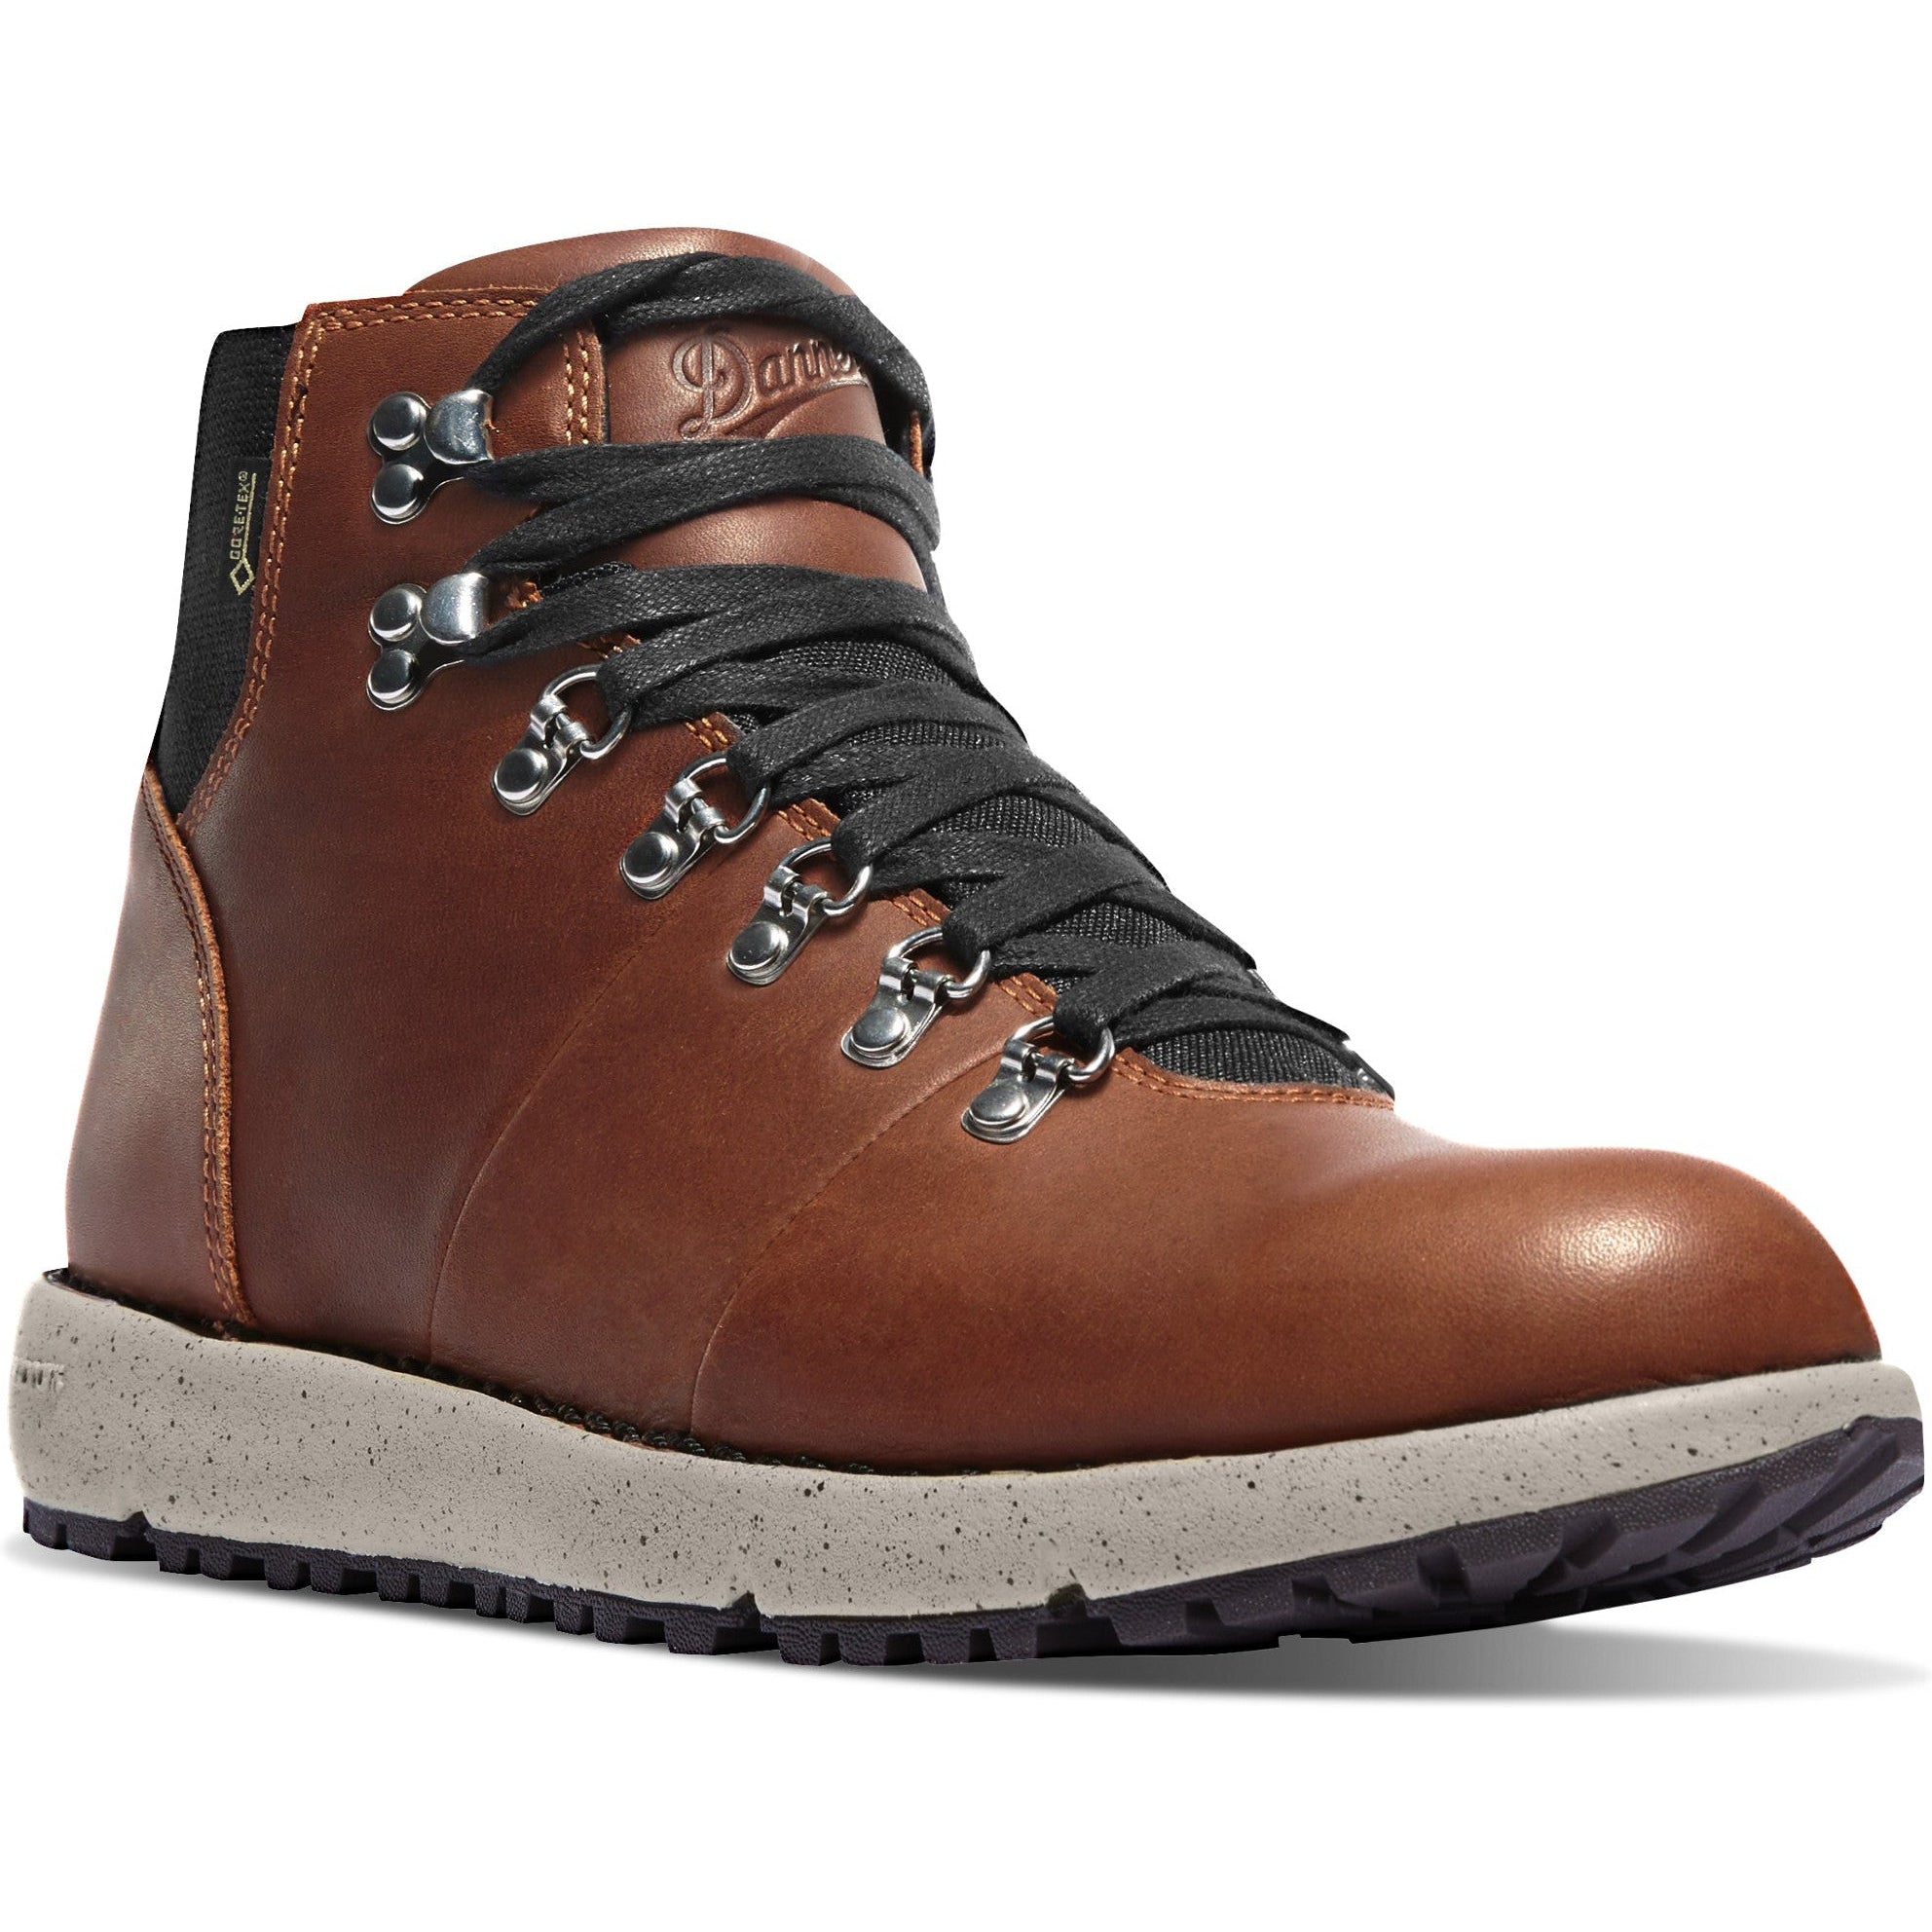 Danner Men's Vertigo 917 5" WP Modernized Hiking Boot - Brown - 32381 7 / Medium / Brown - Overlook Boots